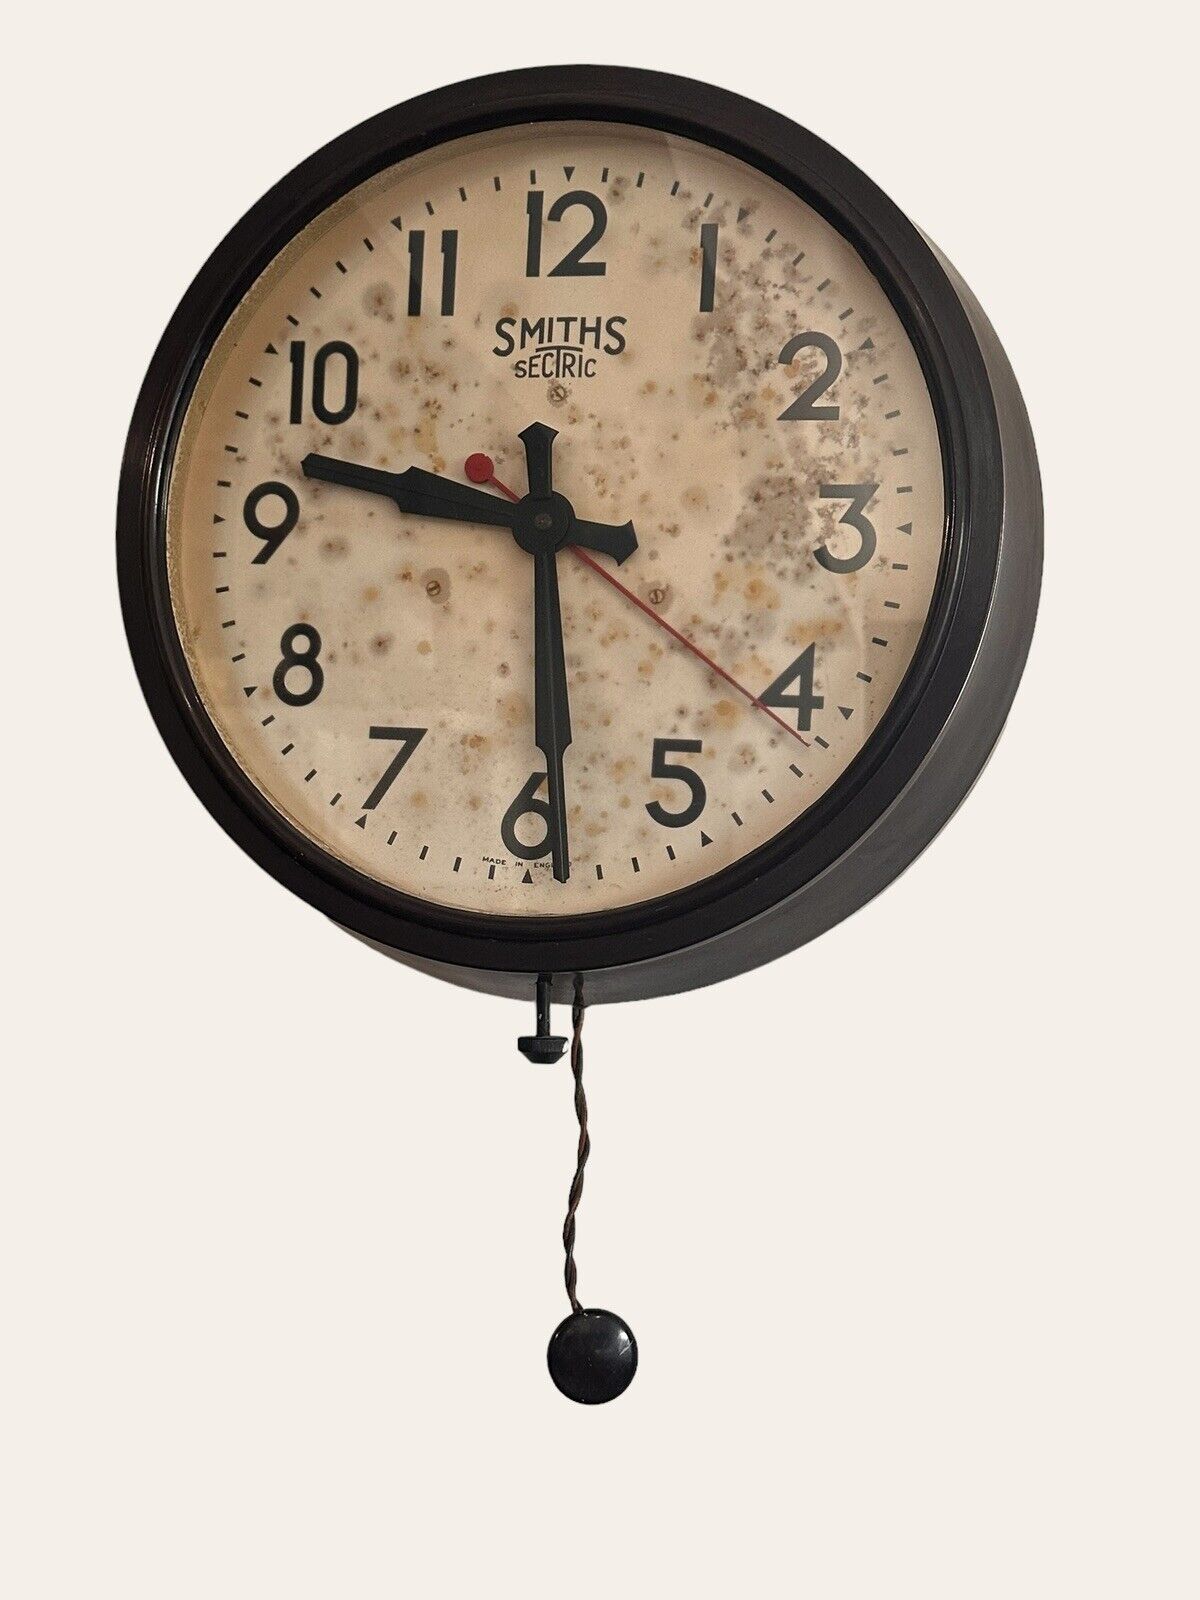 Large Bakelite Smiths Sectric Industrial Clock 38cm Diameter